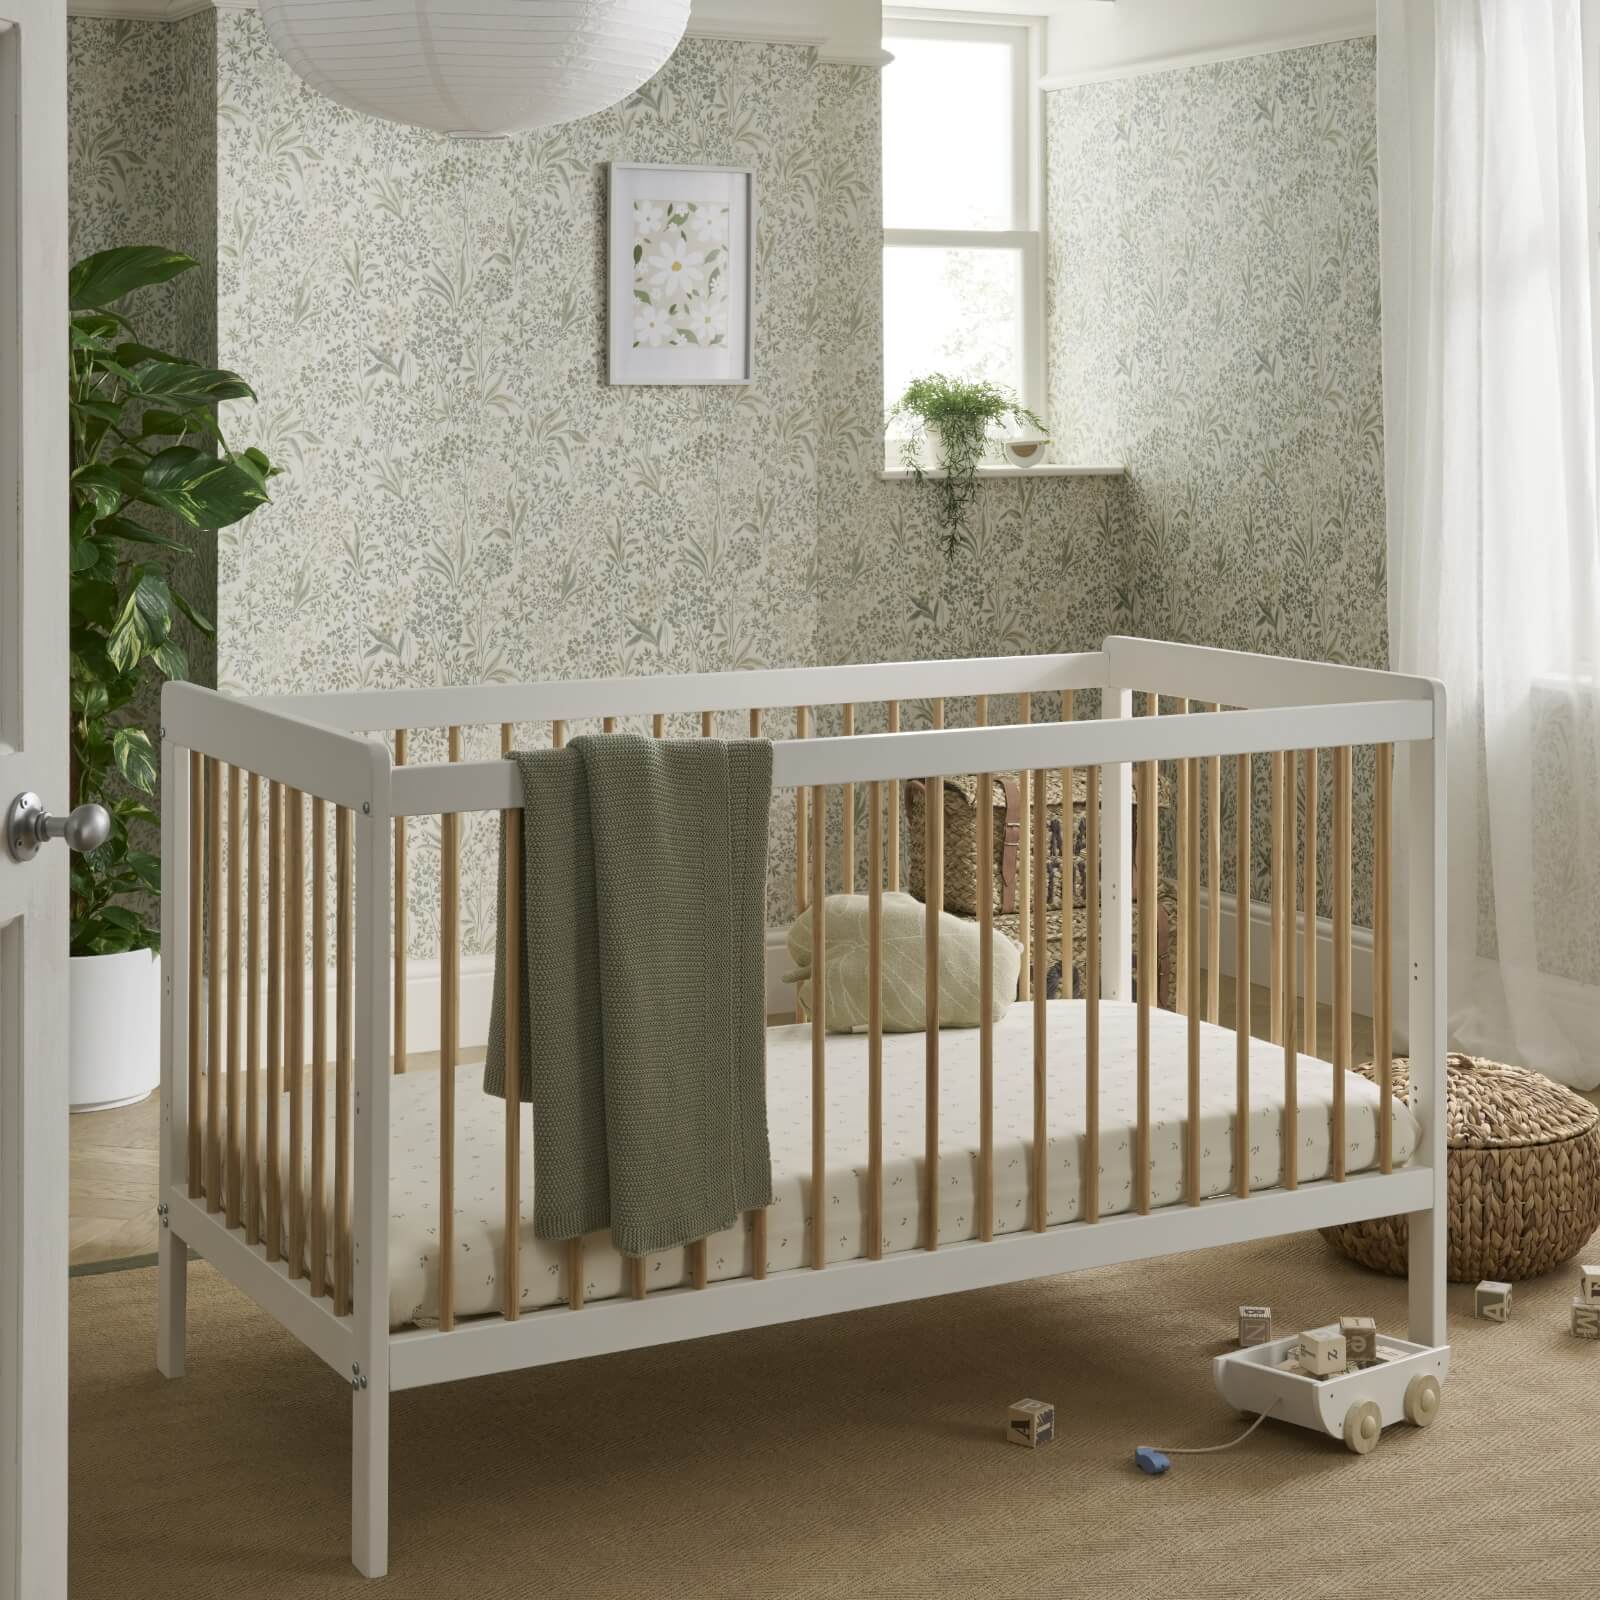 CuddleCo Nursery Room Sets CuddleCo Nola 2 Piece Room Set - White & Natural